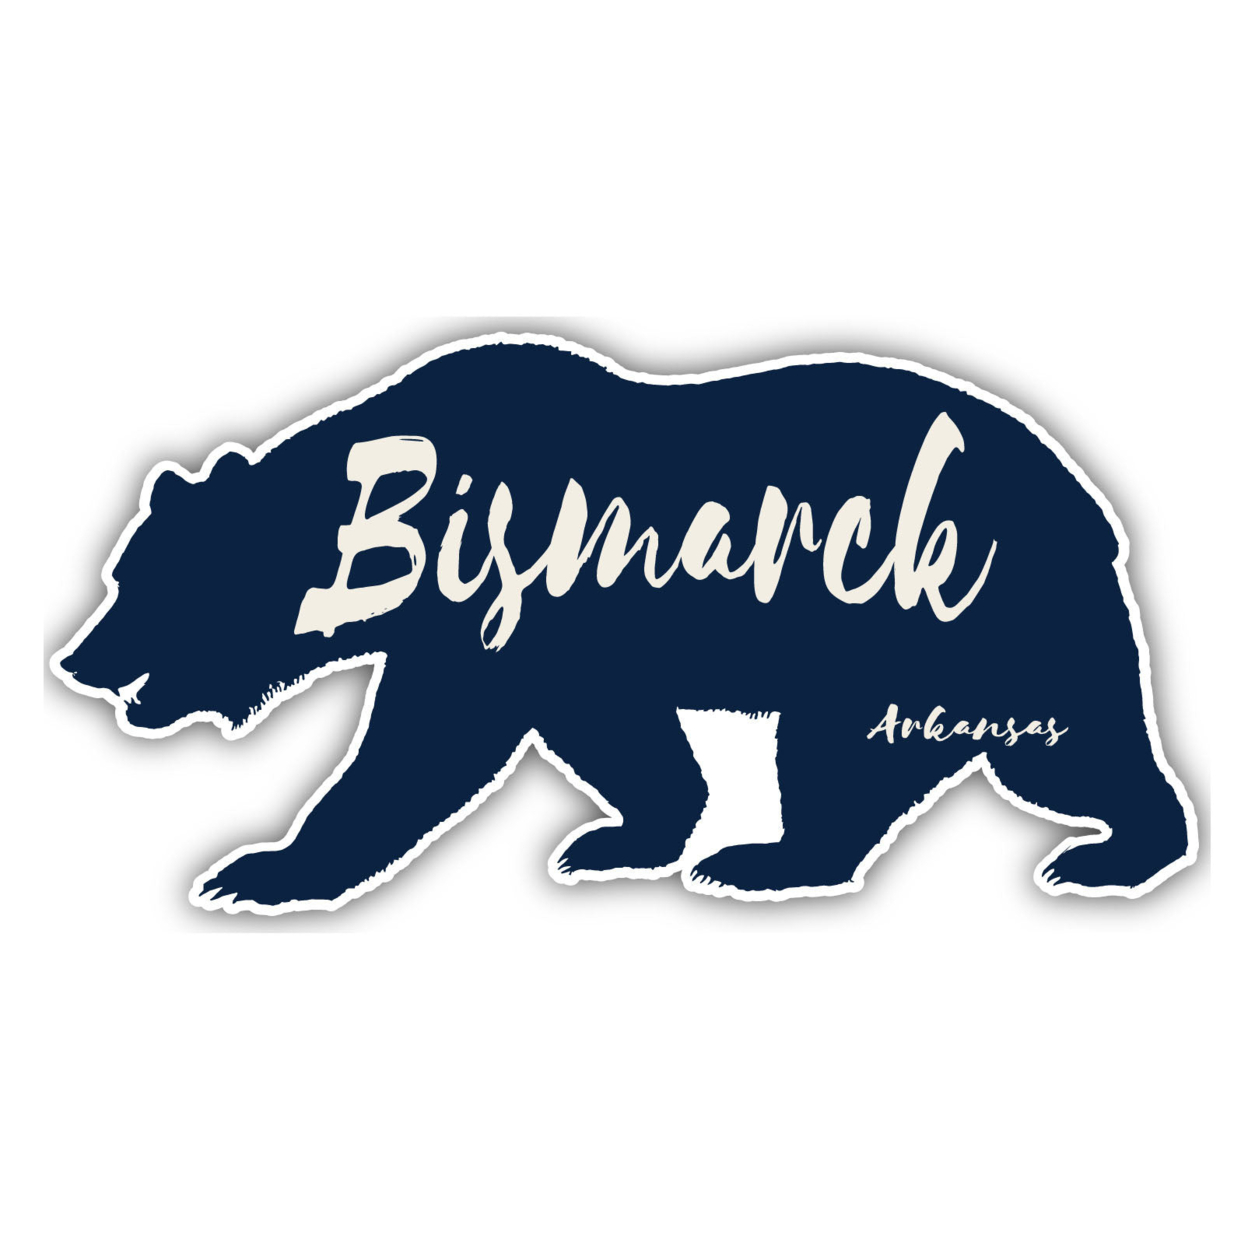 Bismarck Arkansas Souvenir Decorative Stickers (Choose Theme And Size) - Single Unit, 4-Inch, Bear